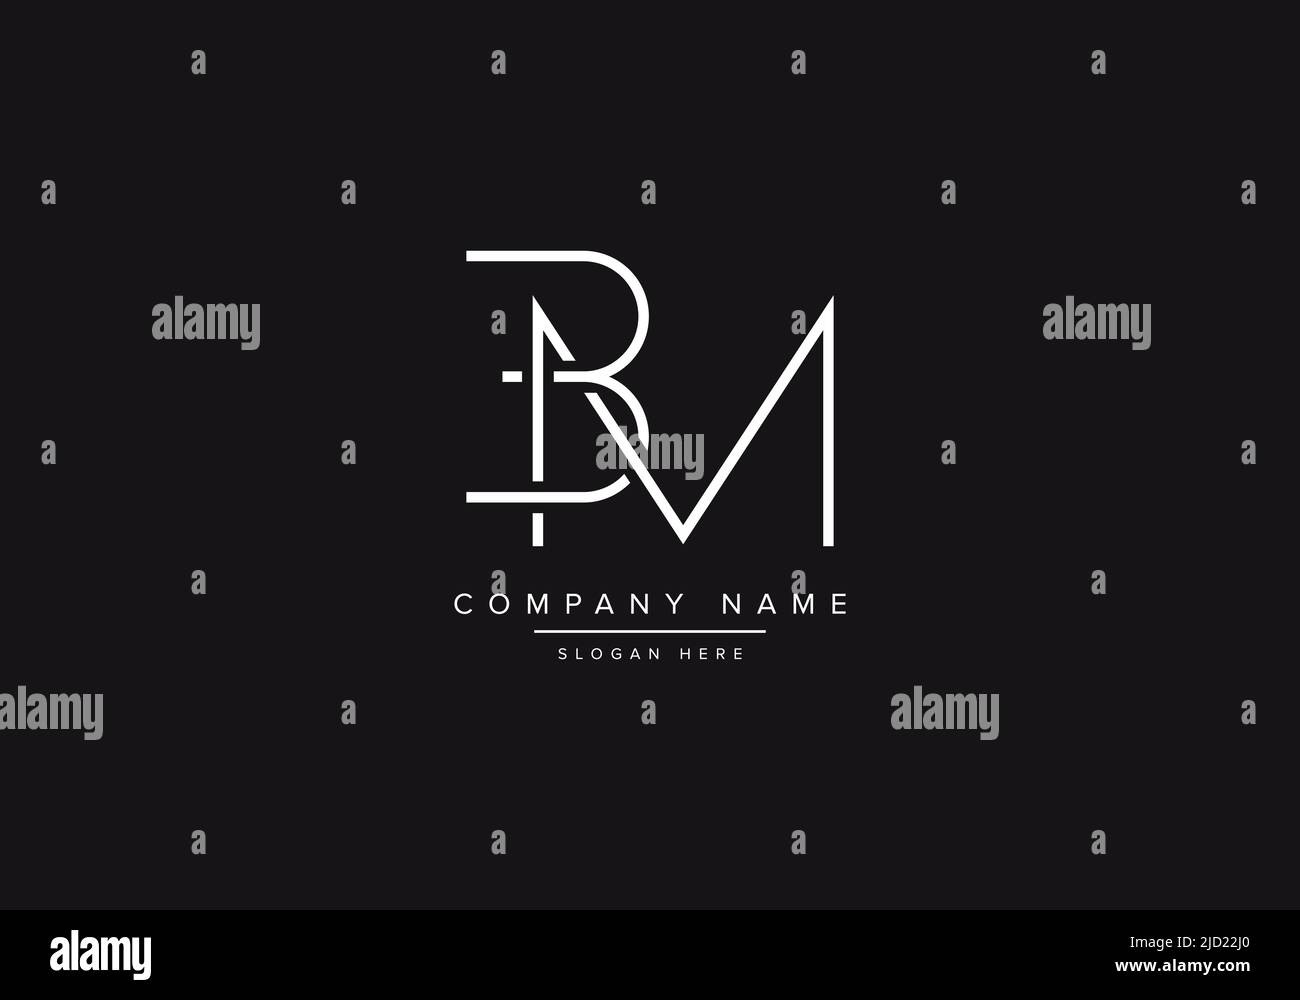 Bm logo monogram with shield shape isolated vector image on VectorStock